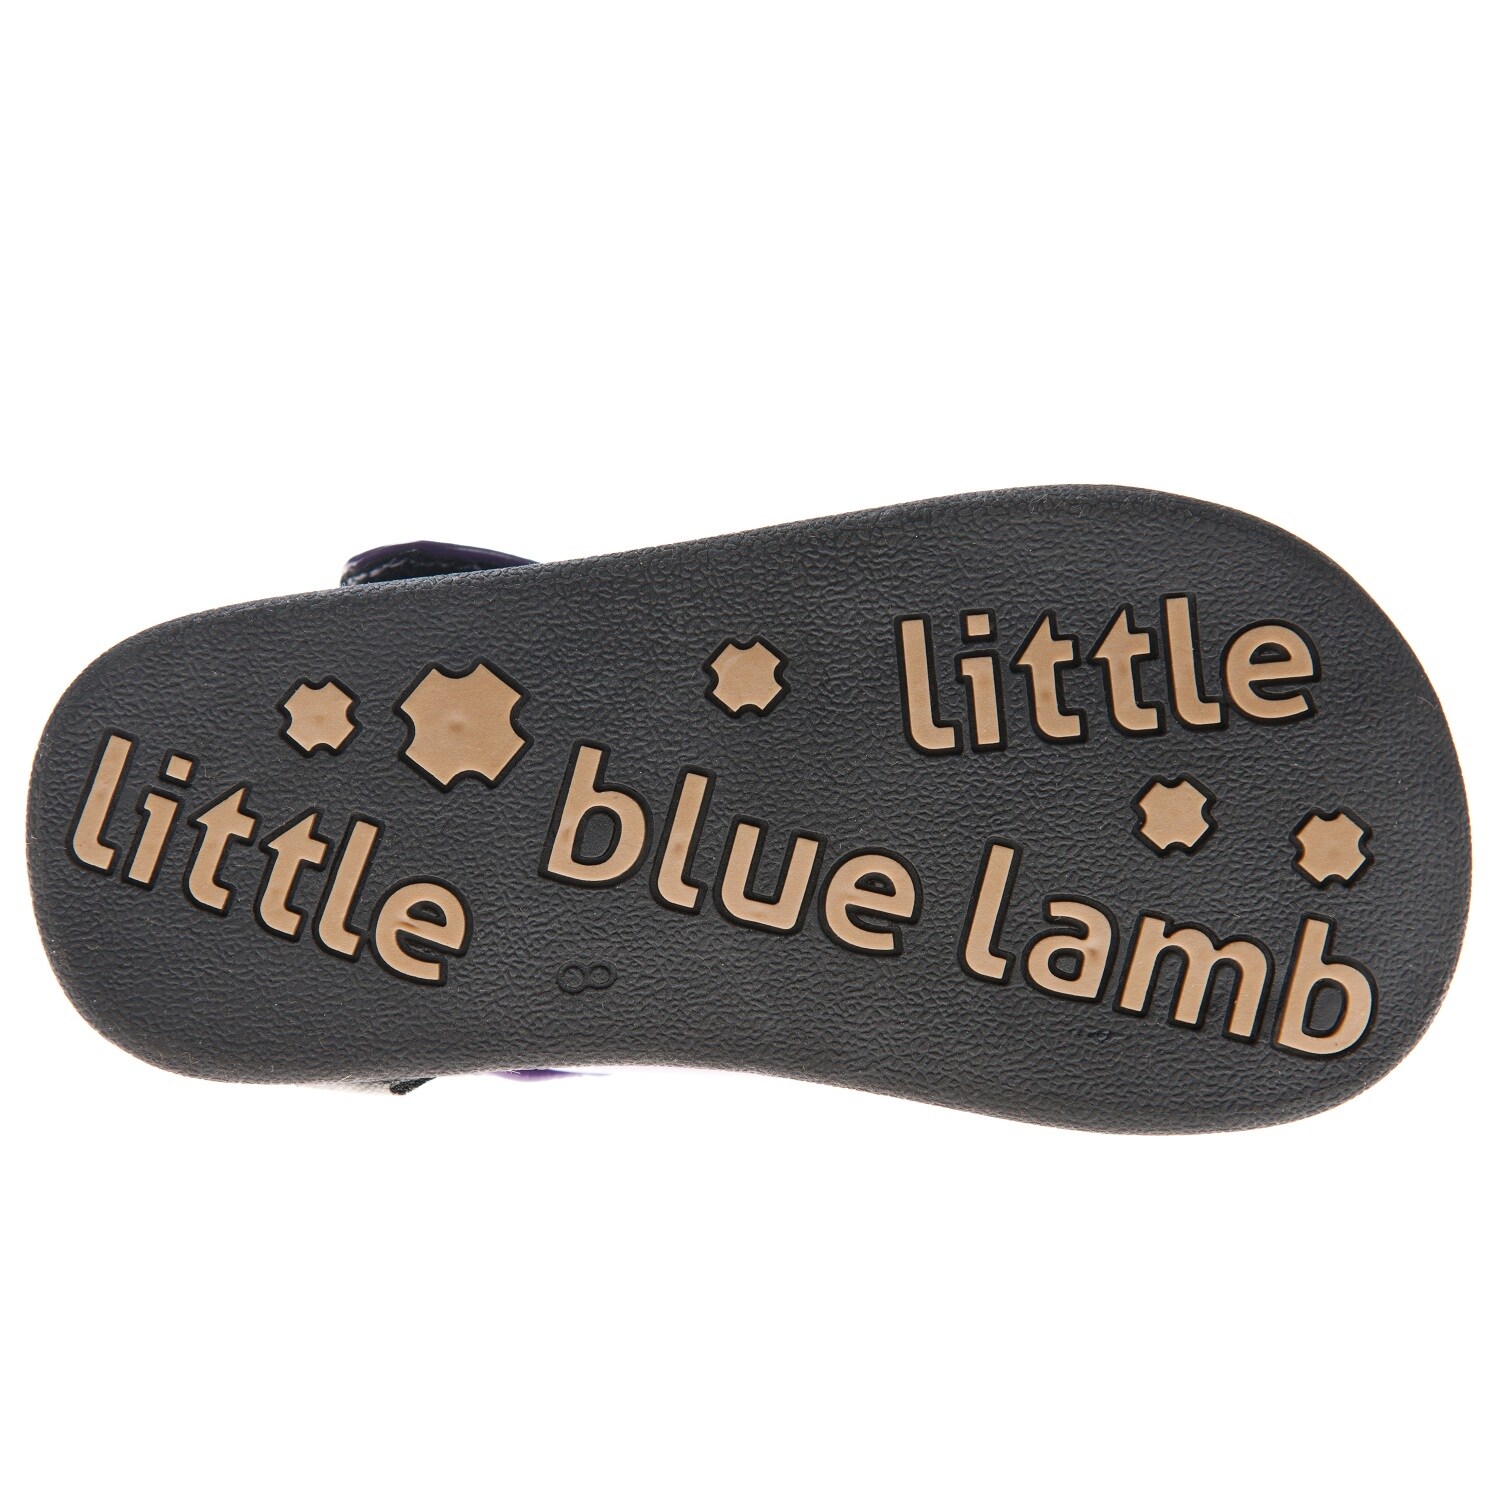 little blue lamb boots